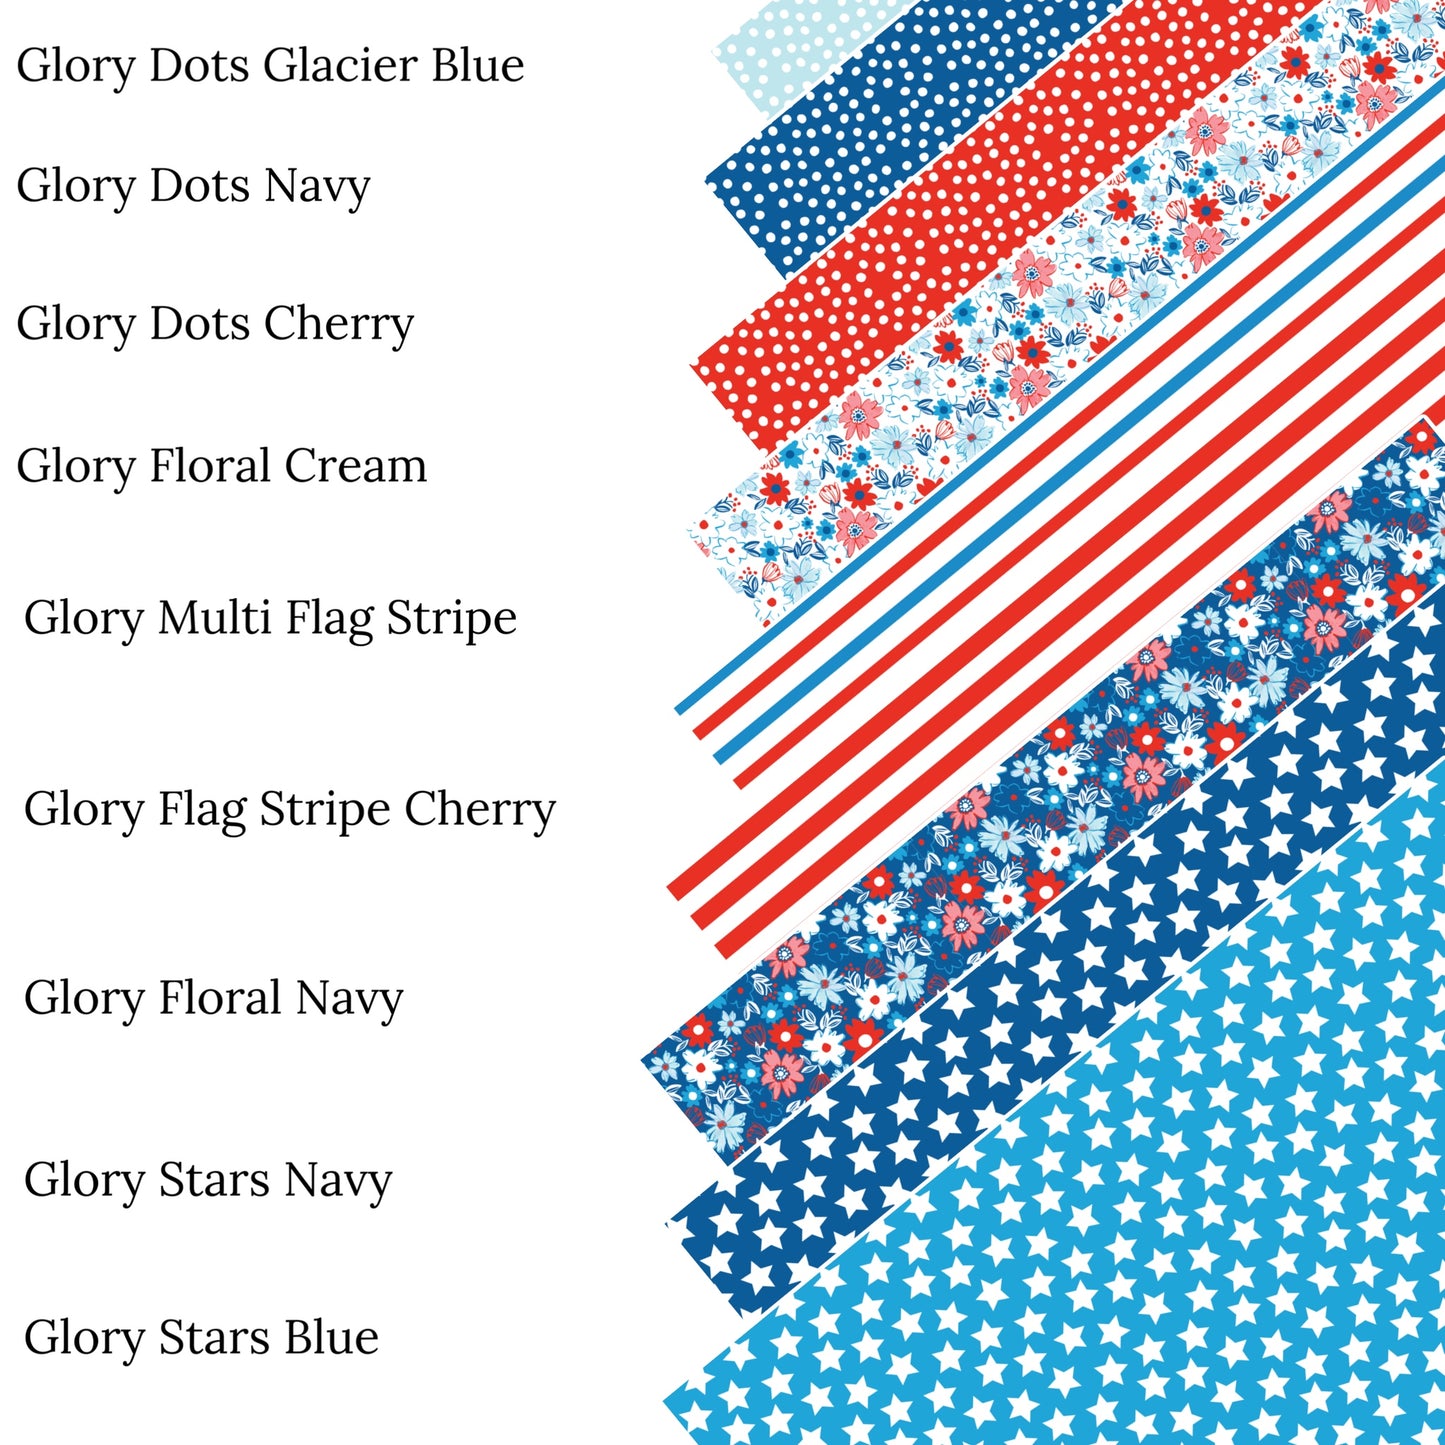 Glory Dots Glacier Blue Faux Leather Sheets